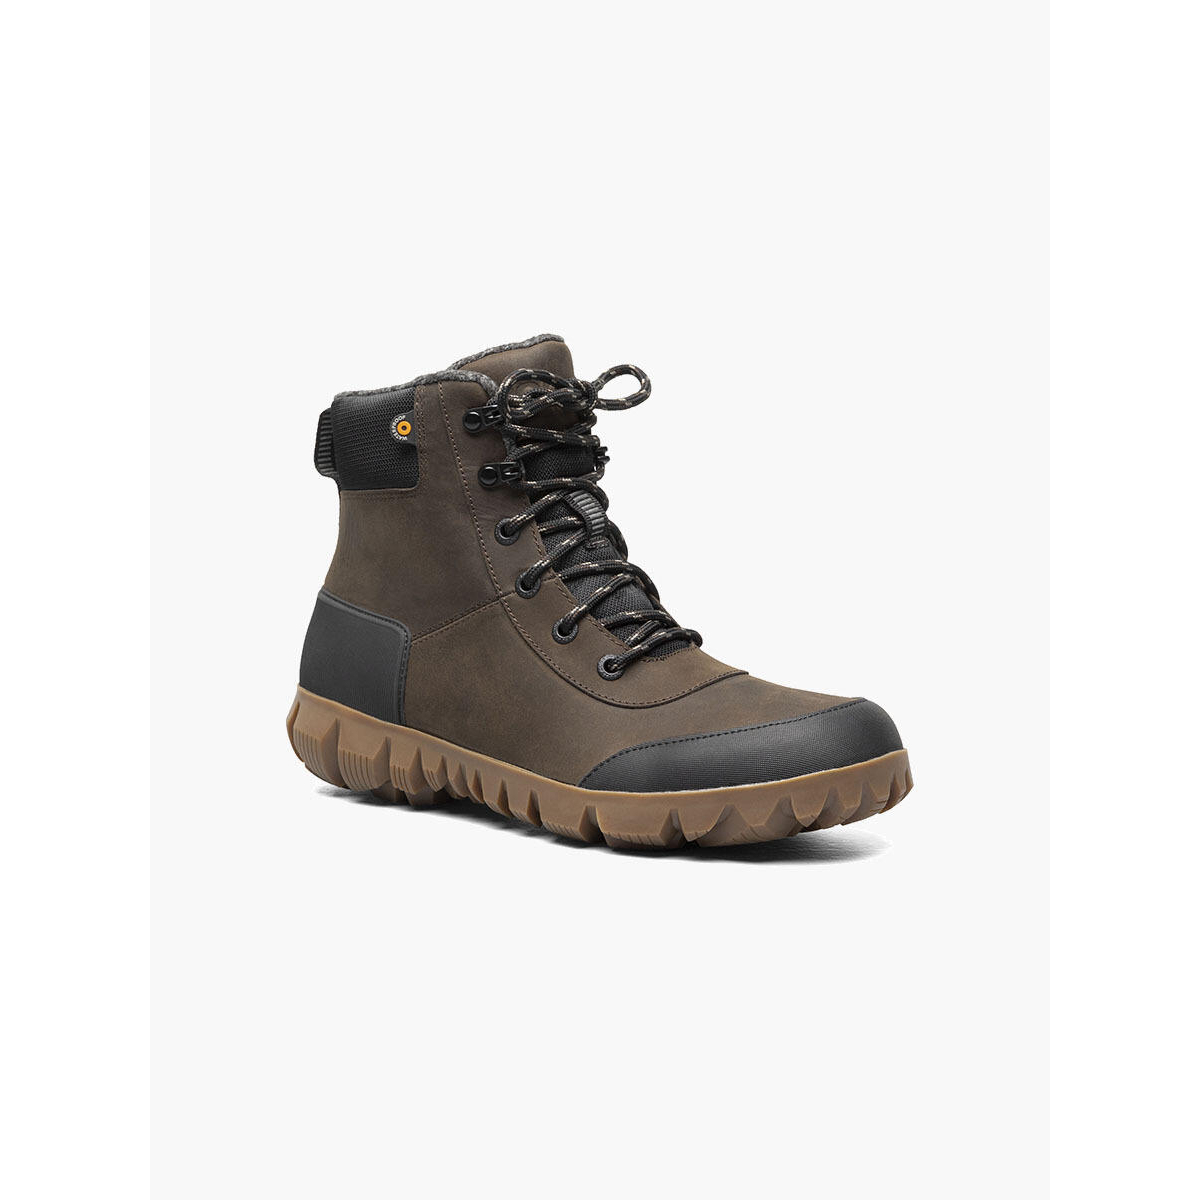 BOGS Men's Arcata Urban Leather Mid Winter Boots Chocolate - 72909-202 CHOCOLATE - CHOCOLATE, 10-M